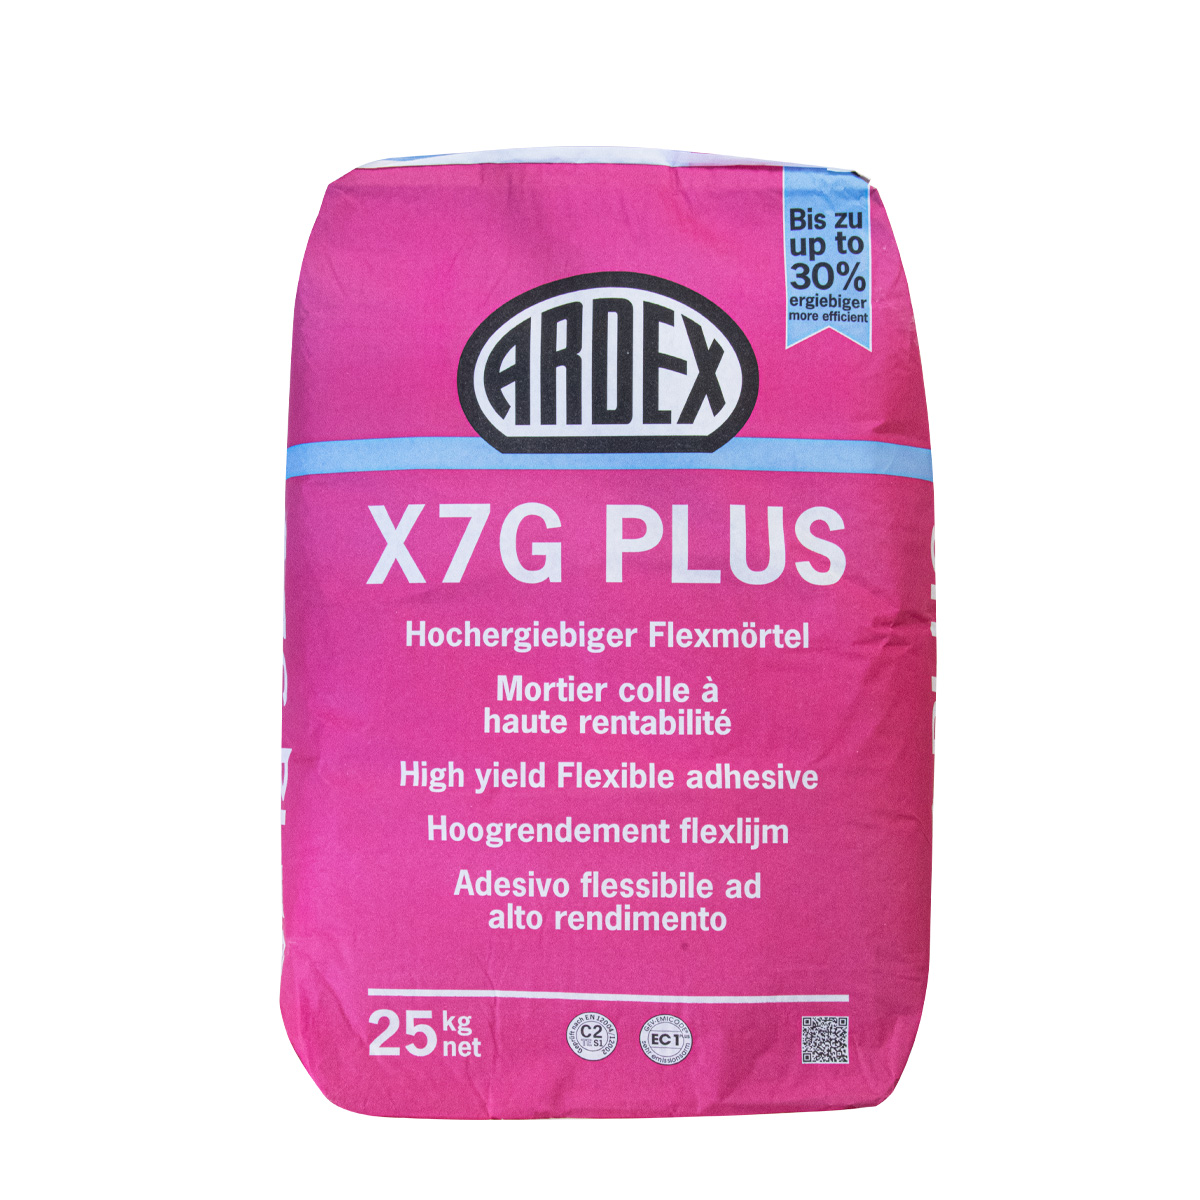 Ardex_X7G-Plus_25kg_gross